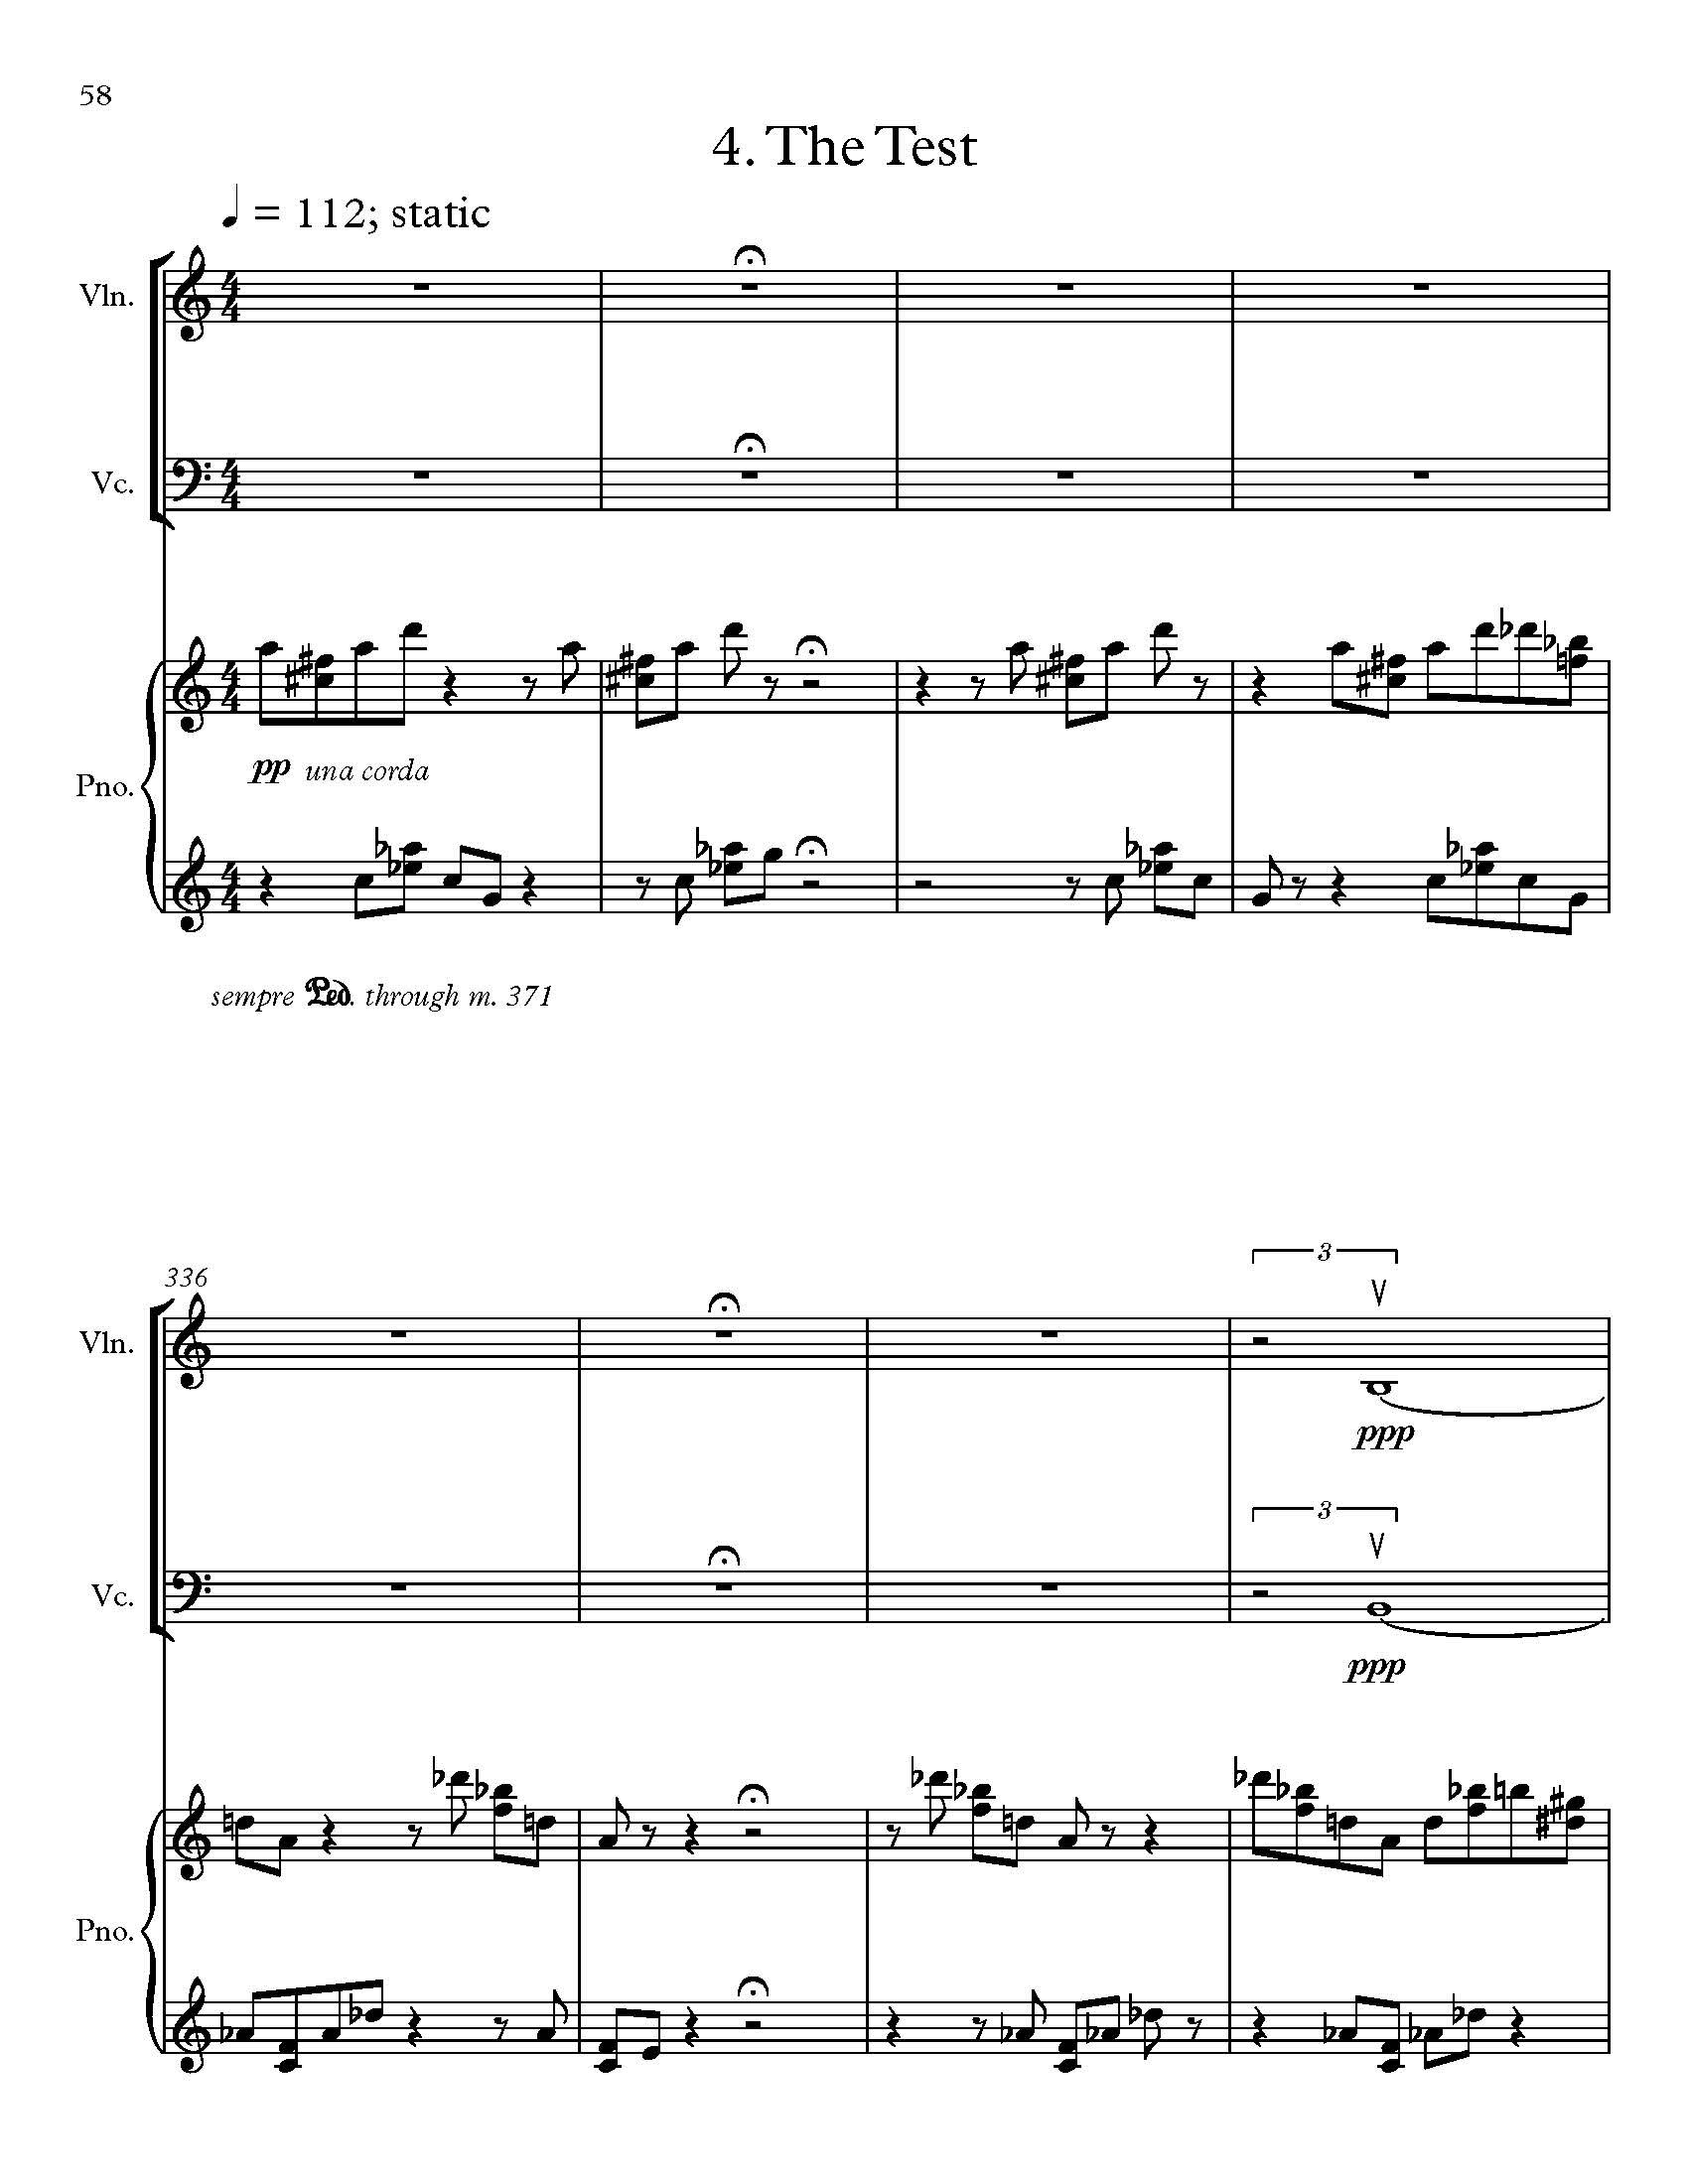 The Birth of Dangun - Complete Score_Page_064.jpg